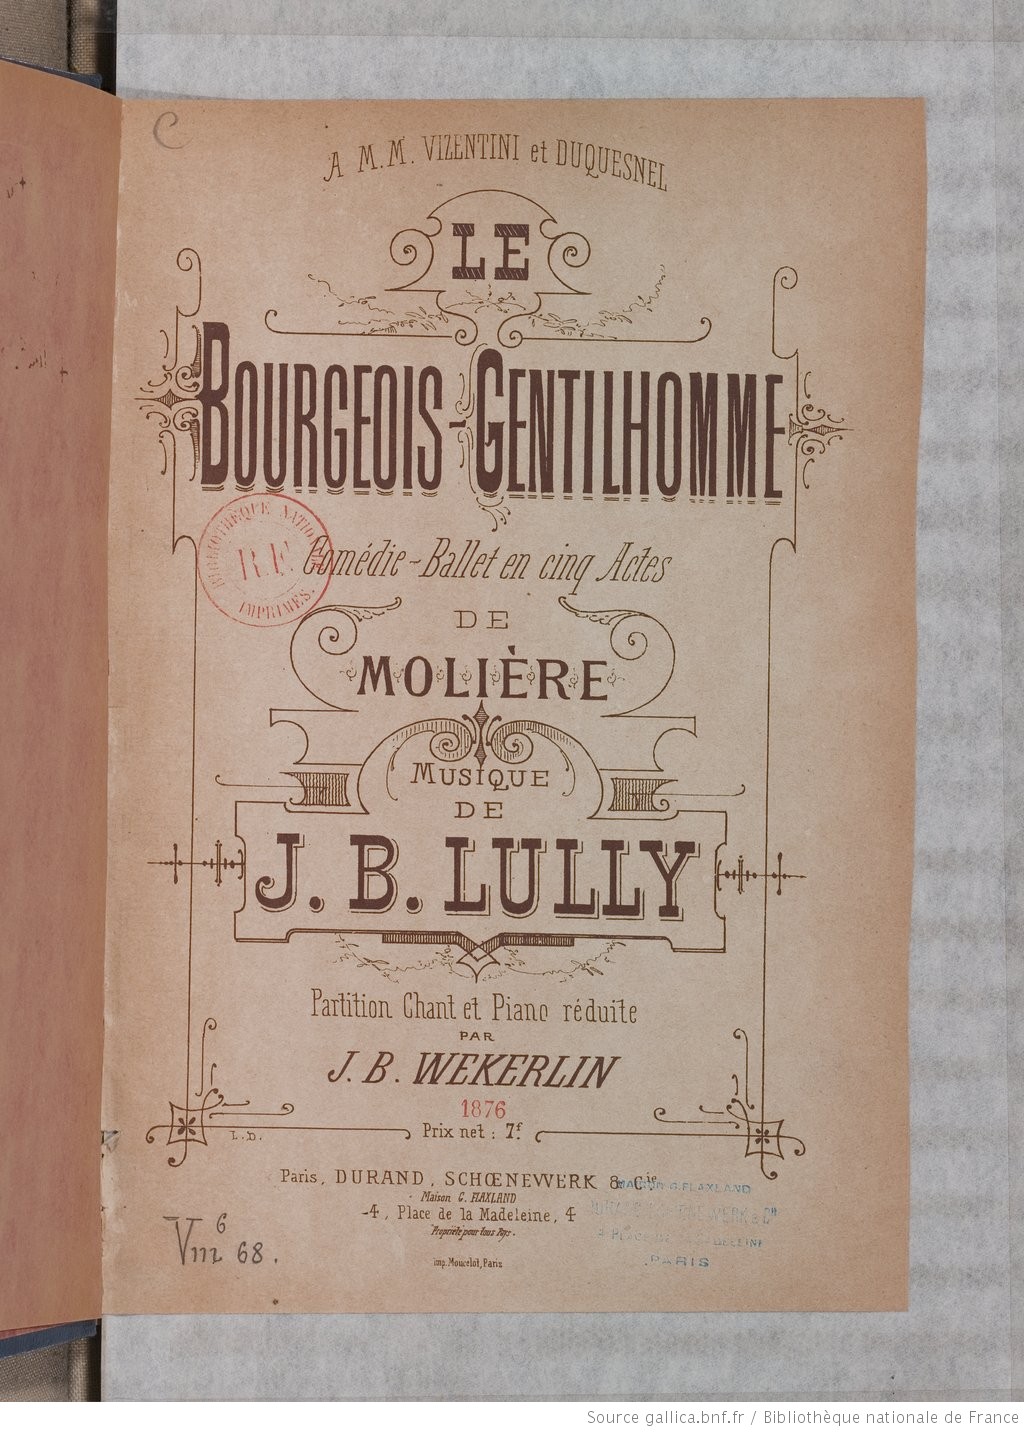 Le Bourgeois-gentilhomme btv1b520008754 5.jpeg